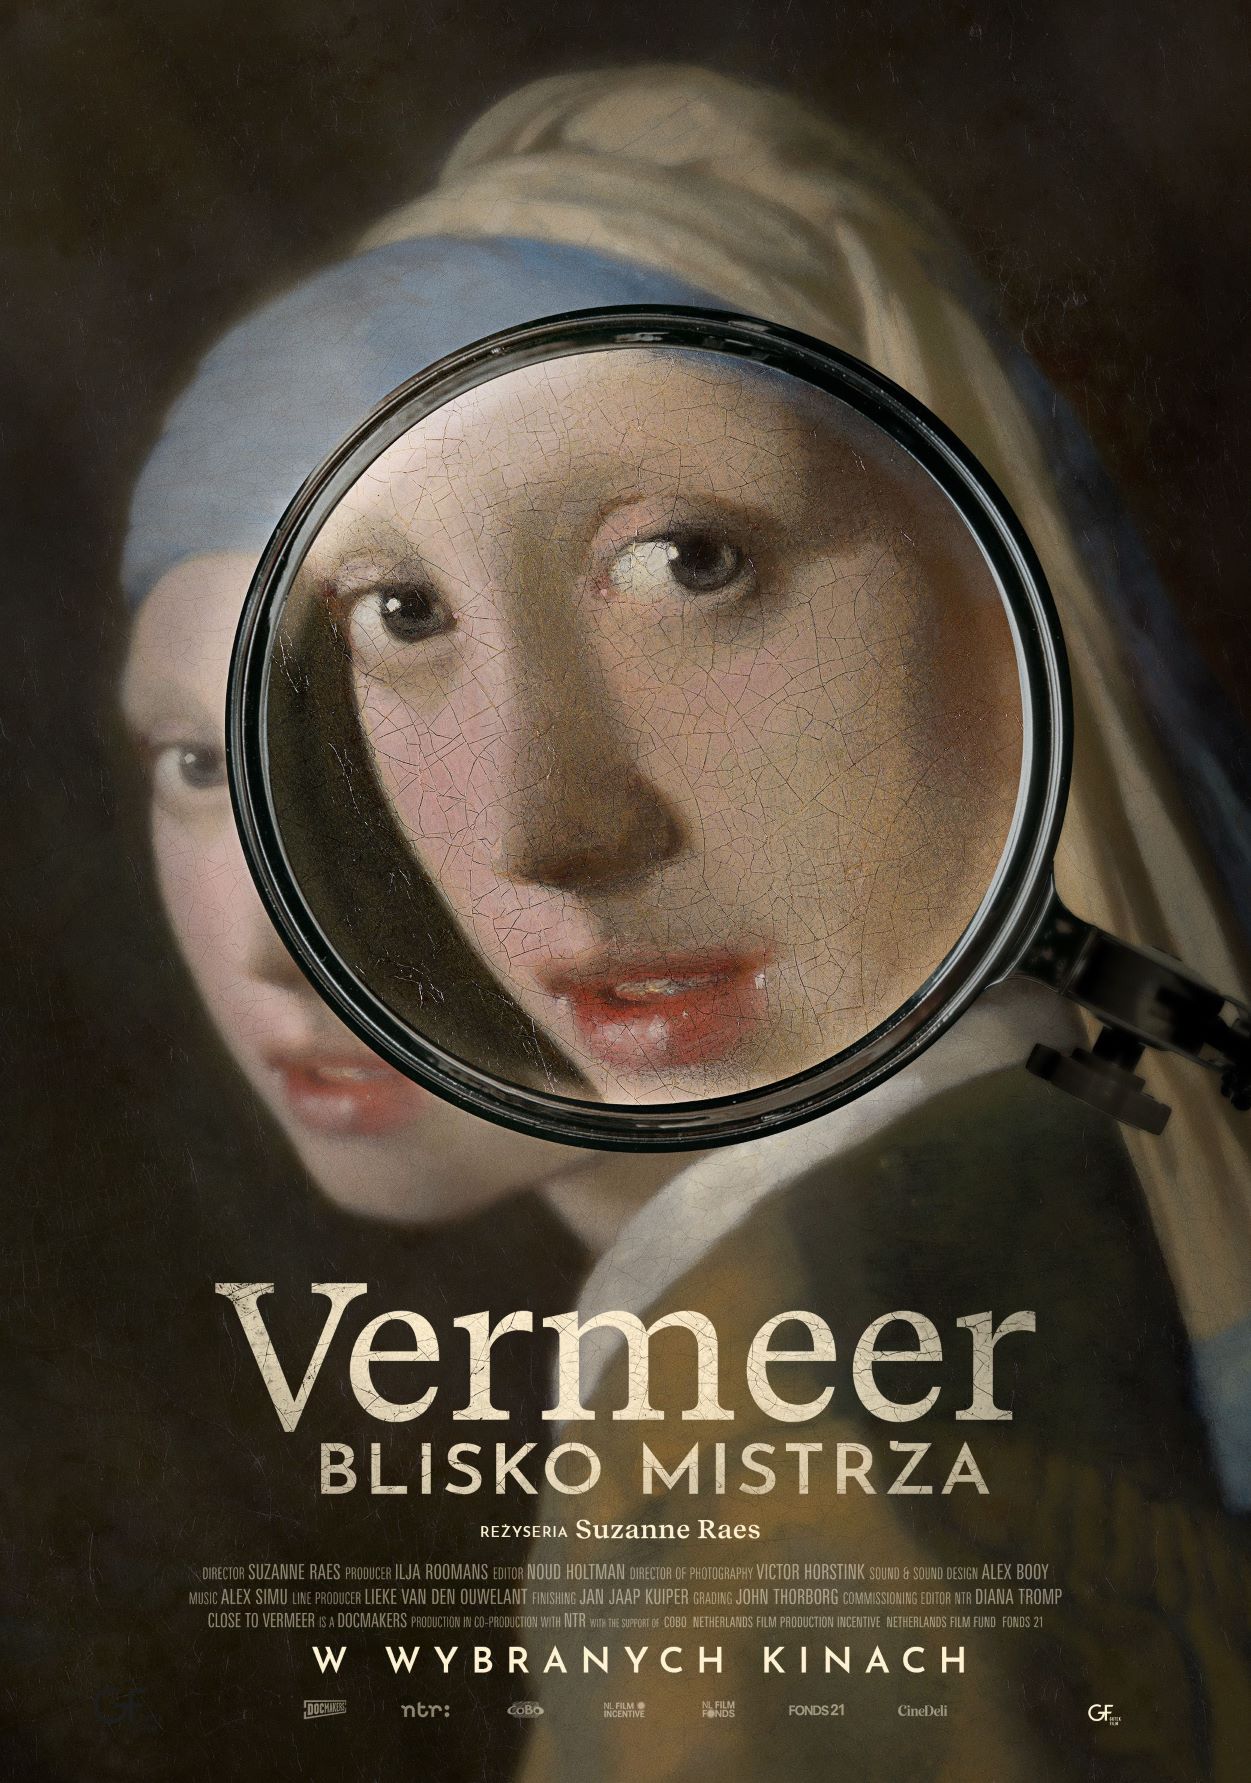 Plakat Vermeer. Blisko mistrza 178411